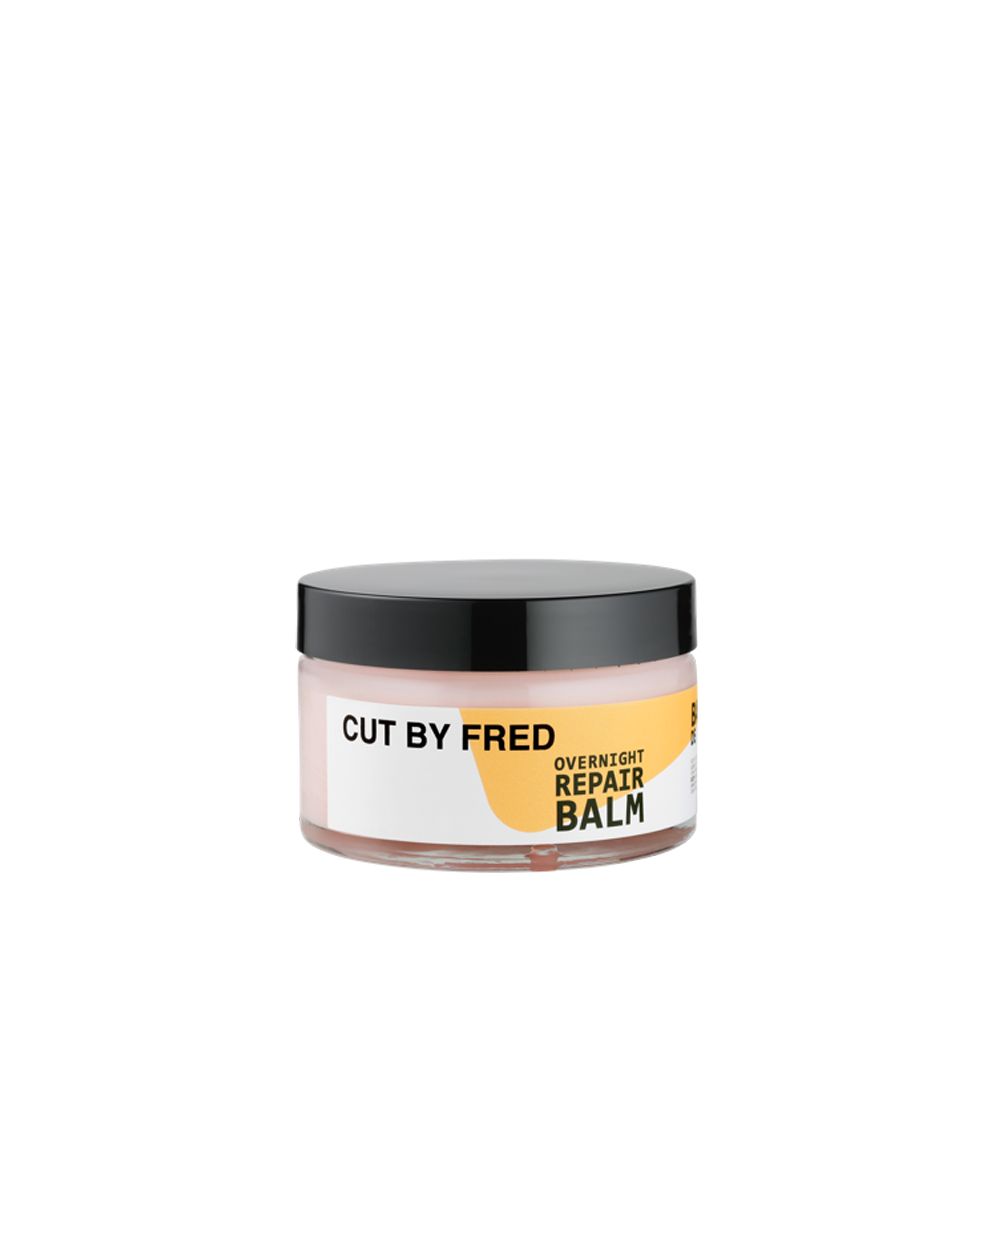 CUT BY FRED Overnight Repair Balm Nourishing Hair Mask | Buy